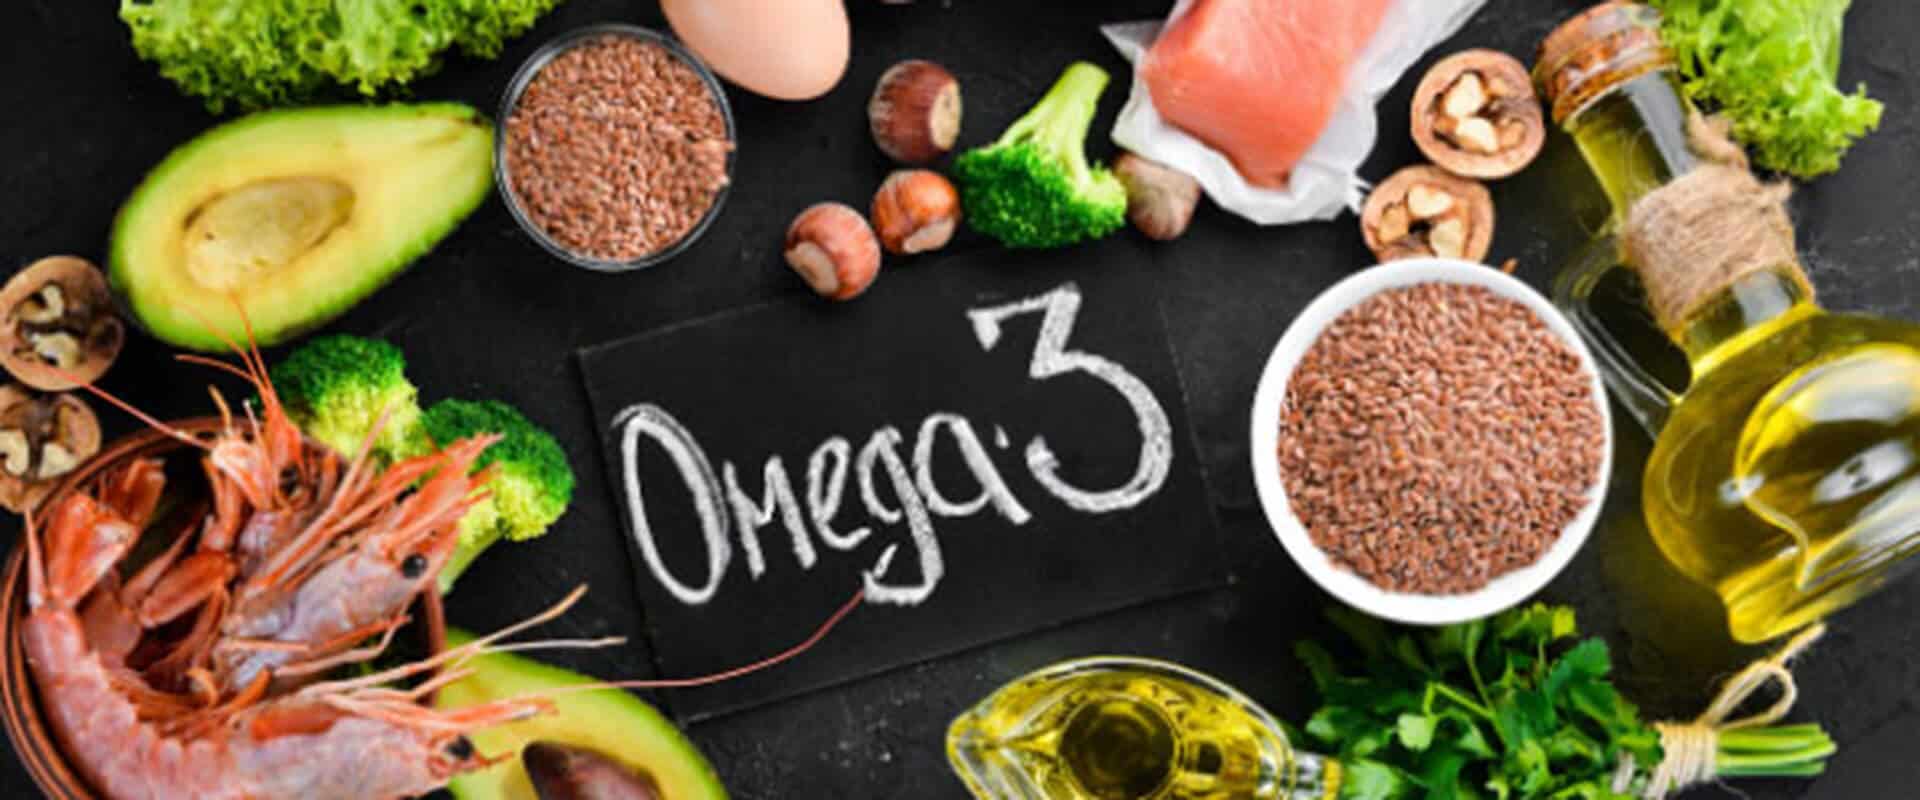 Lebensmittel mit Omega-3-Fettsäuren